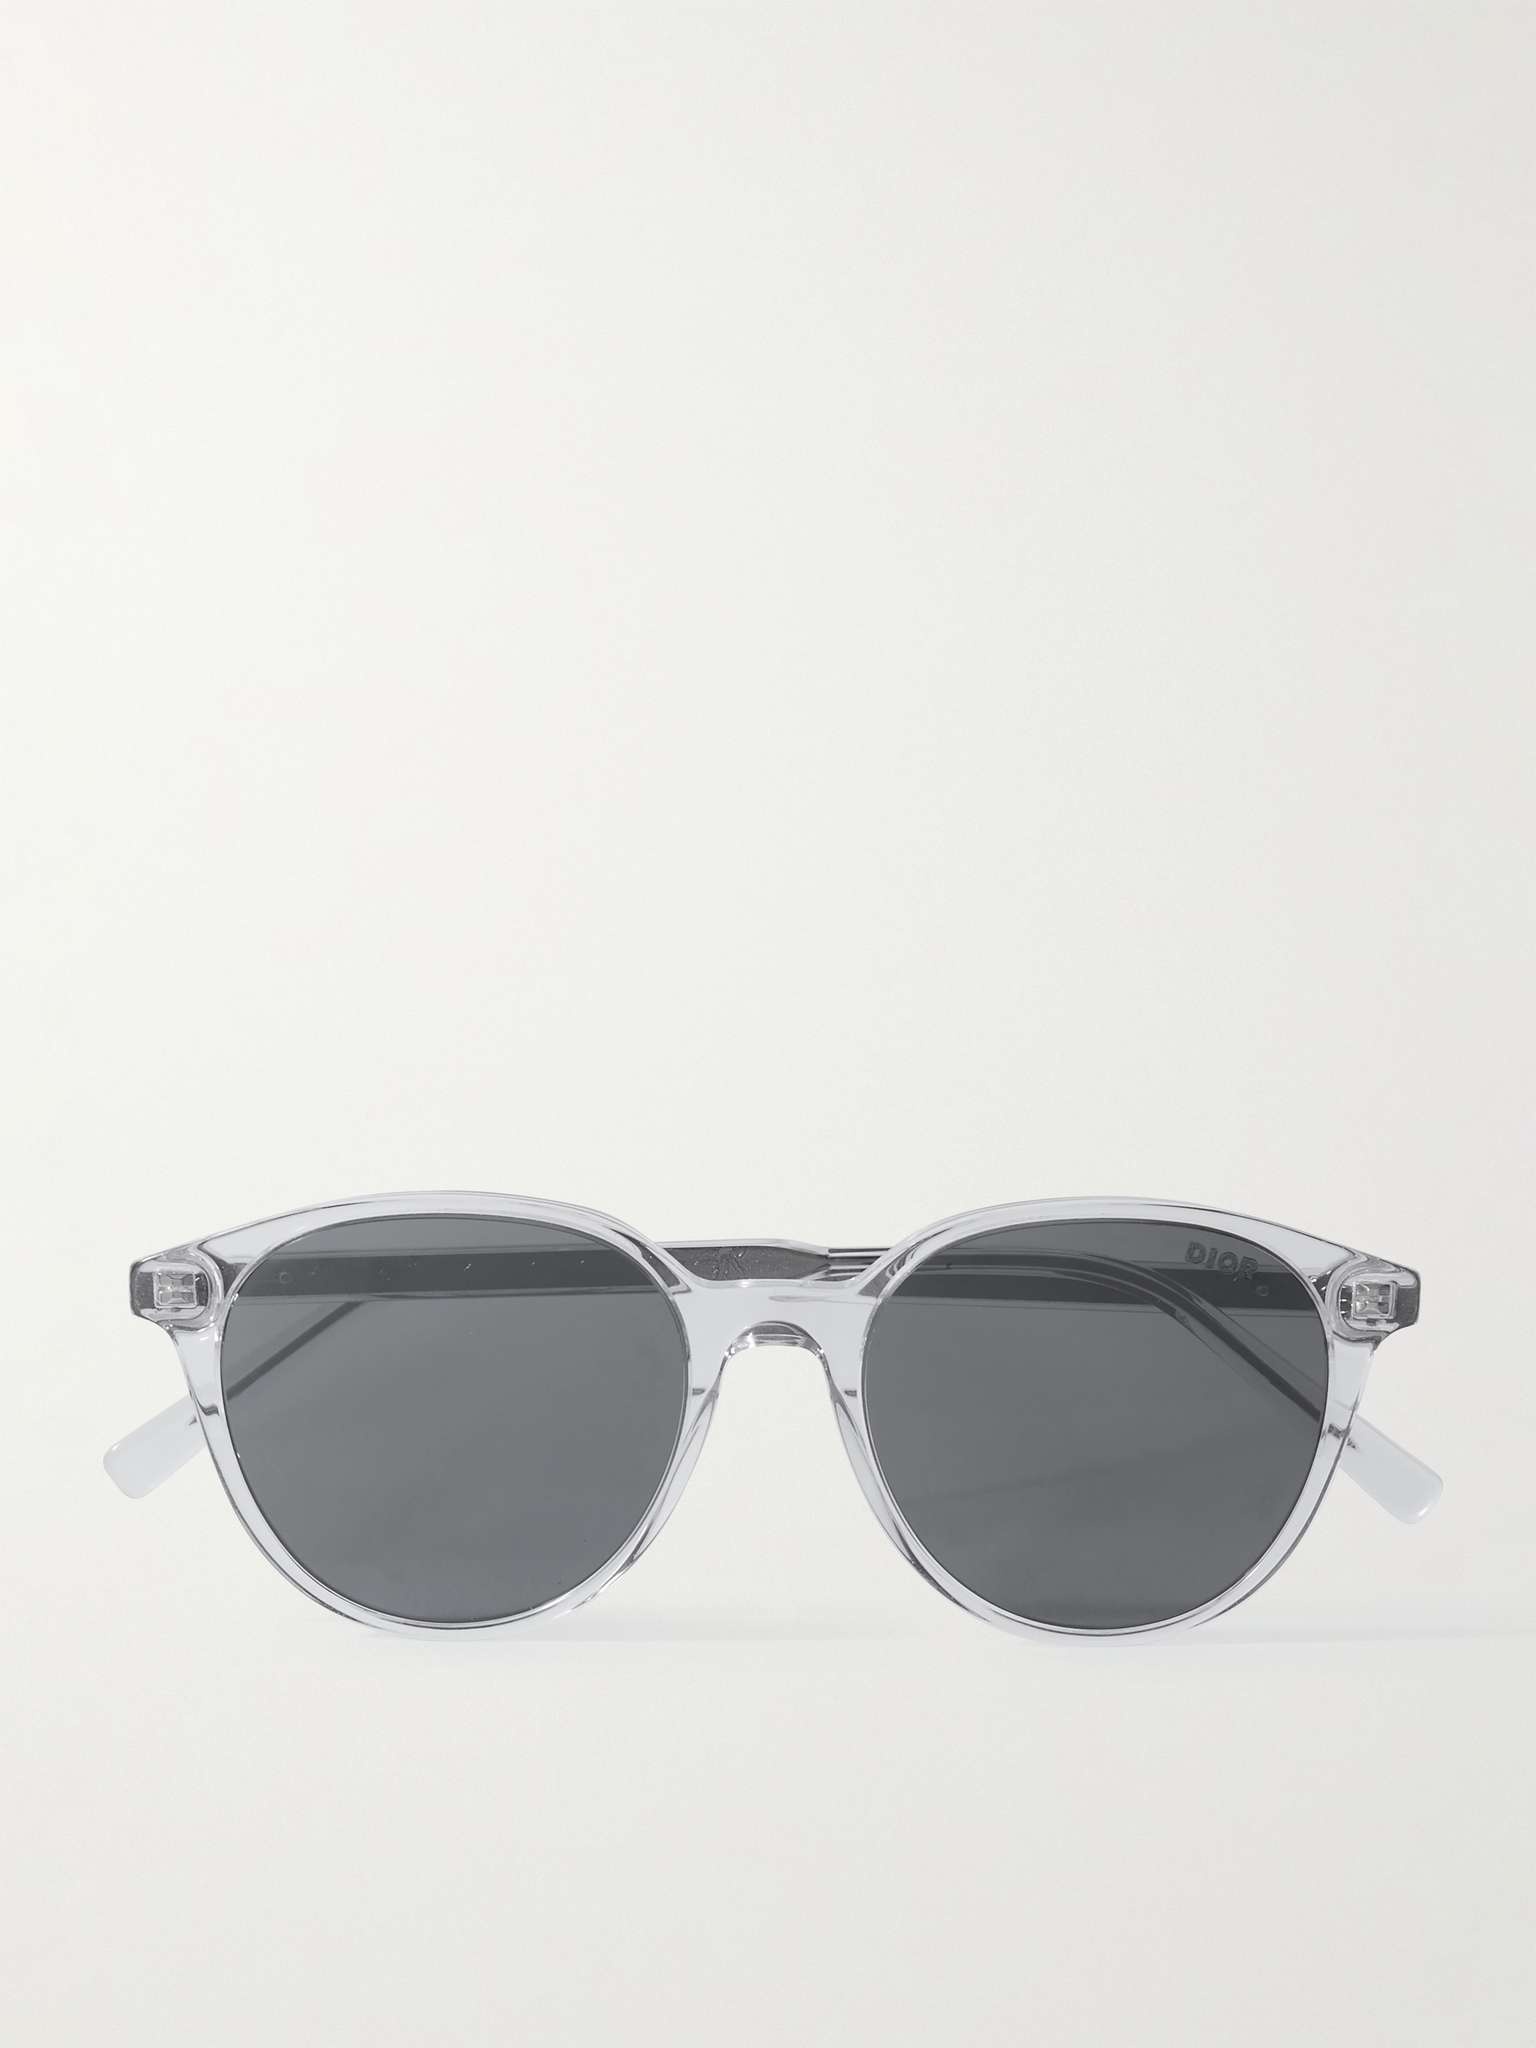 InDior R1I Round-Frame Acetate Sunglasses - 1